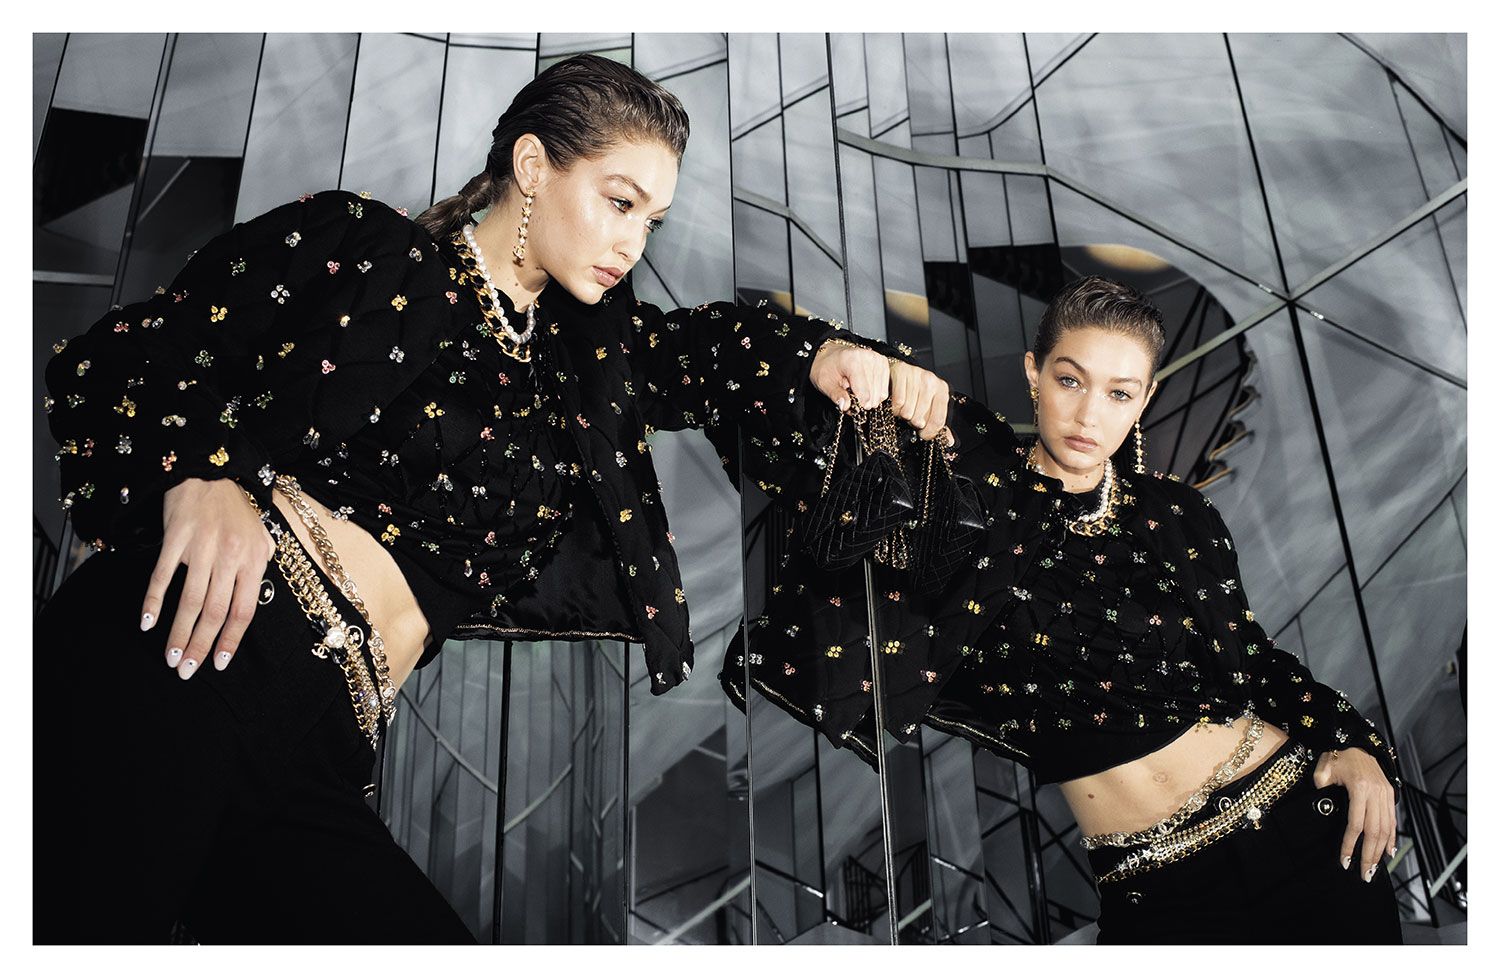 Sofia Coppola in the Fashion Métiers d'art Ateliers — CHANEL